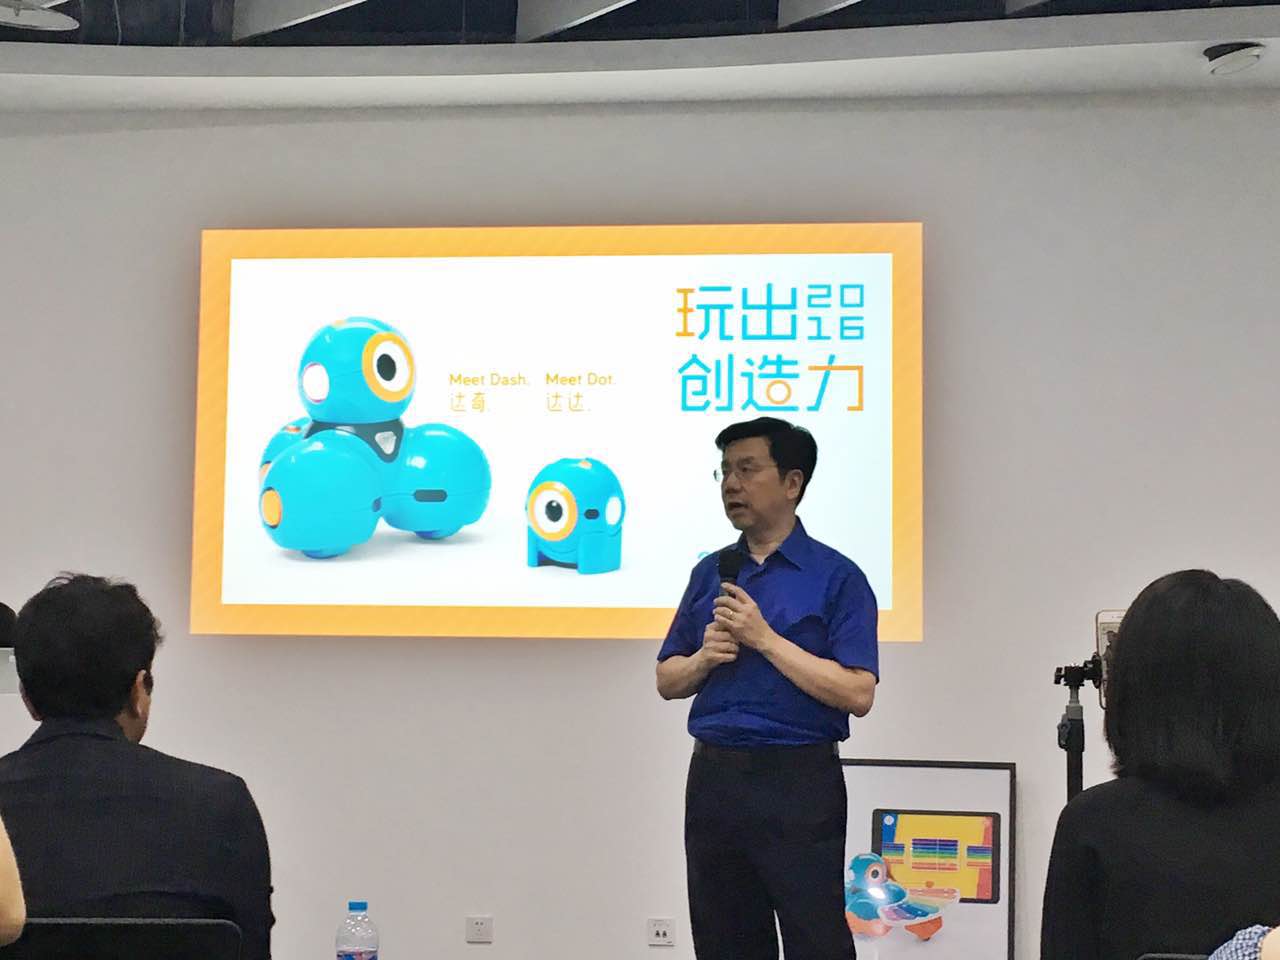 Wonder Workshop 完成 2000 万美元 B 轮融资，开源机器人开始进入中国市场